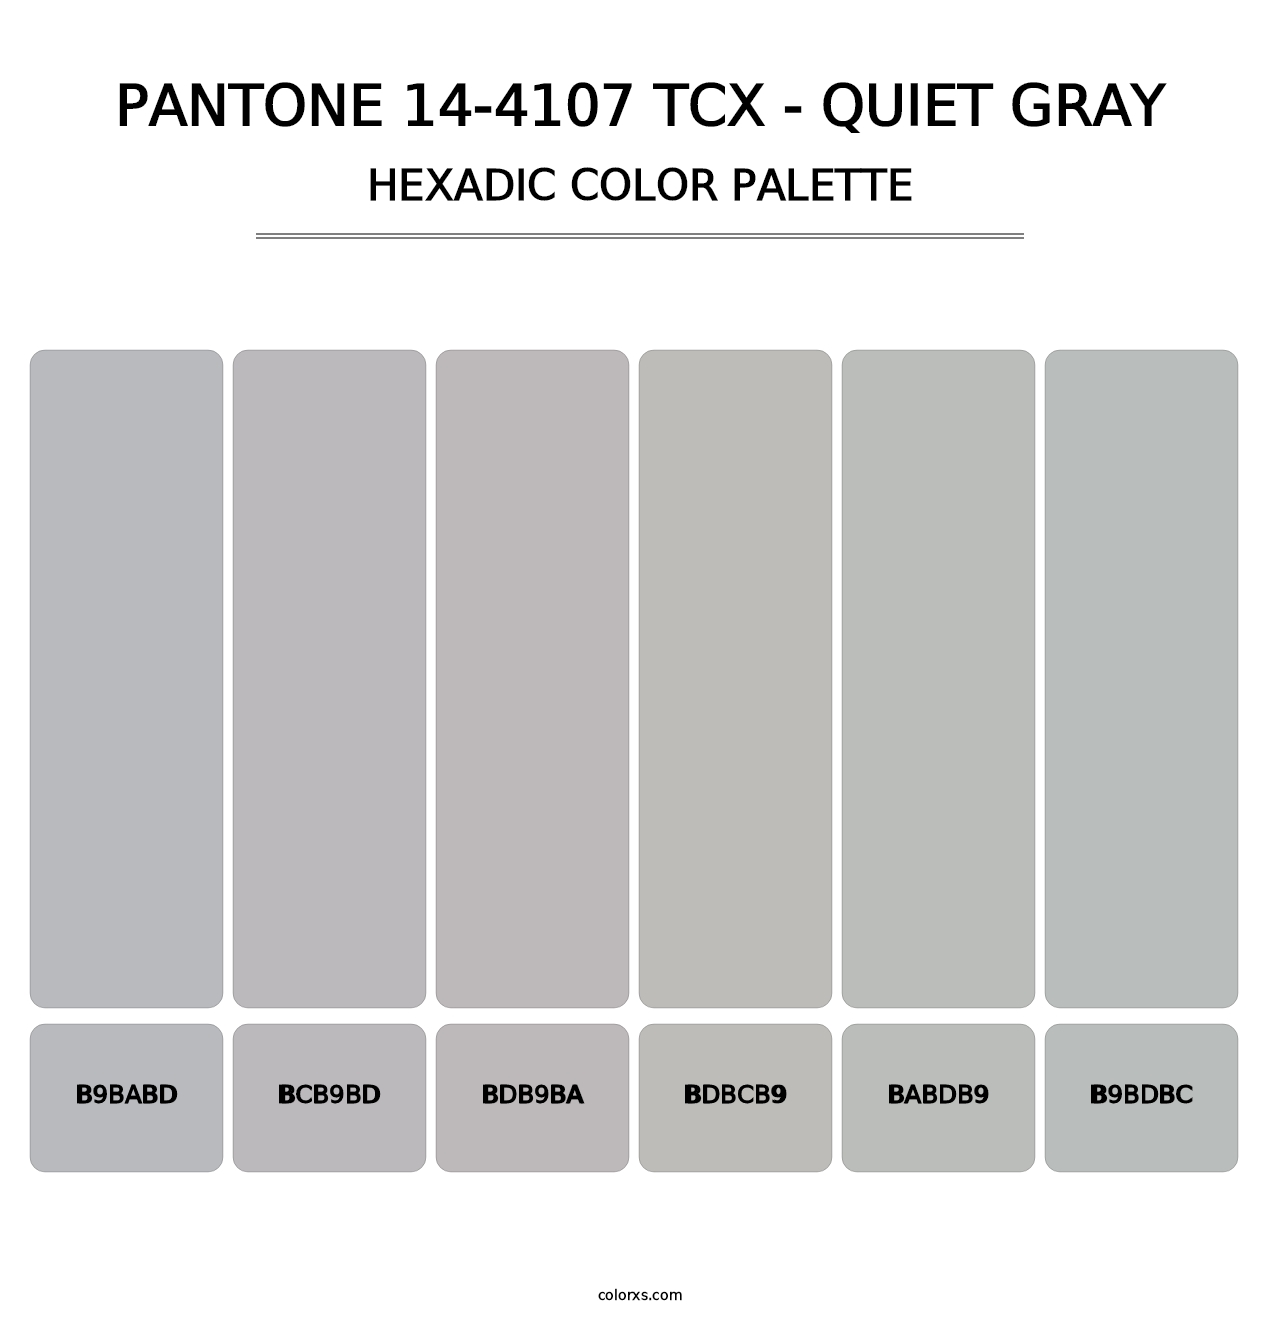 PANTONE 14-4107 TCX - Quiet Gray - Hexadic Color Palette